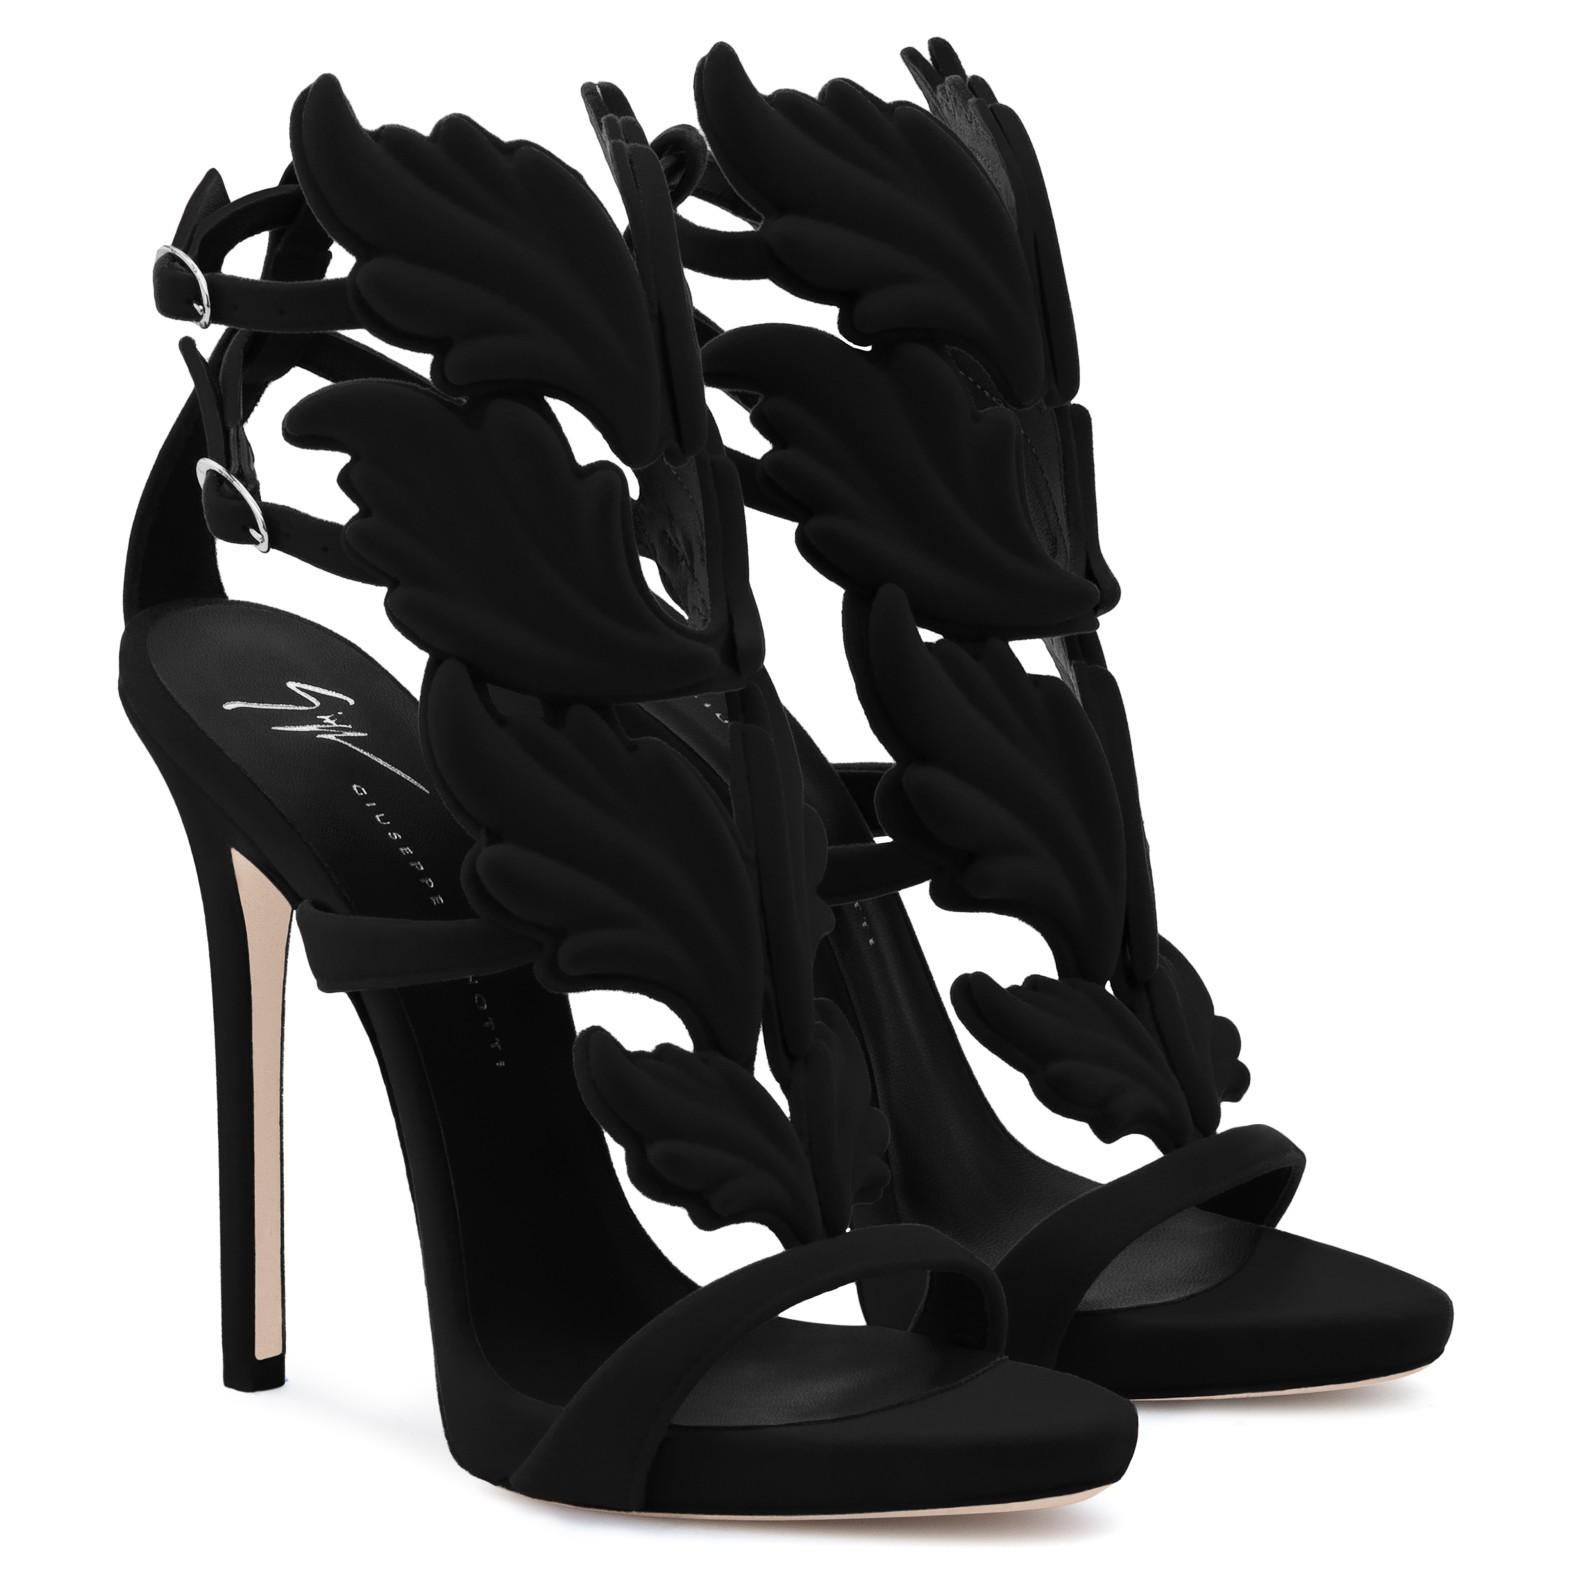 Giuseppe Zanotti NEW Black Suede Velvet Evening Sandals Heels in Box 1